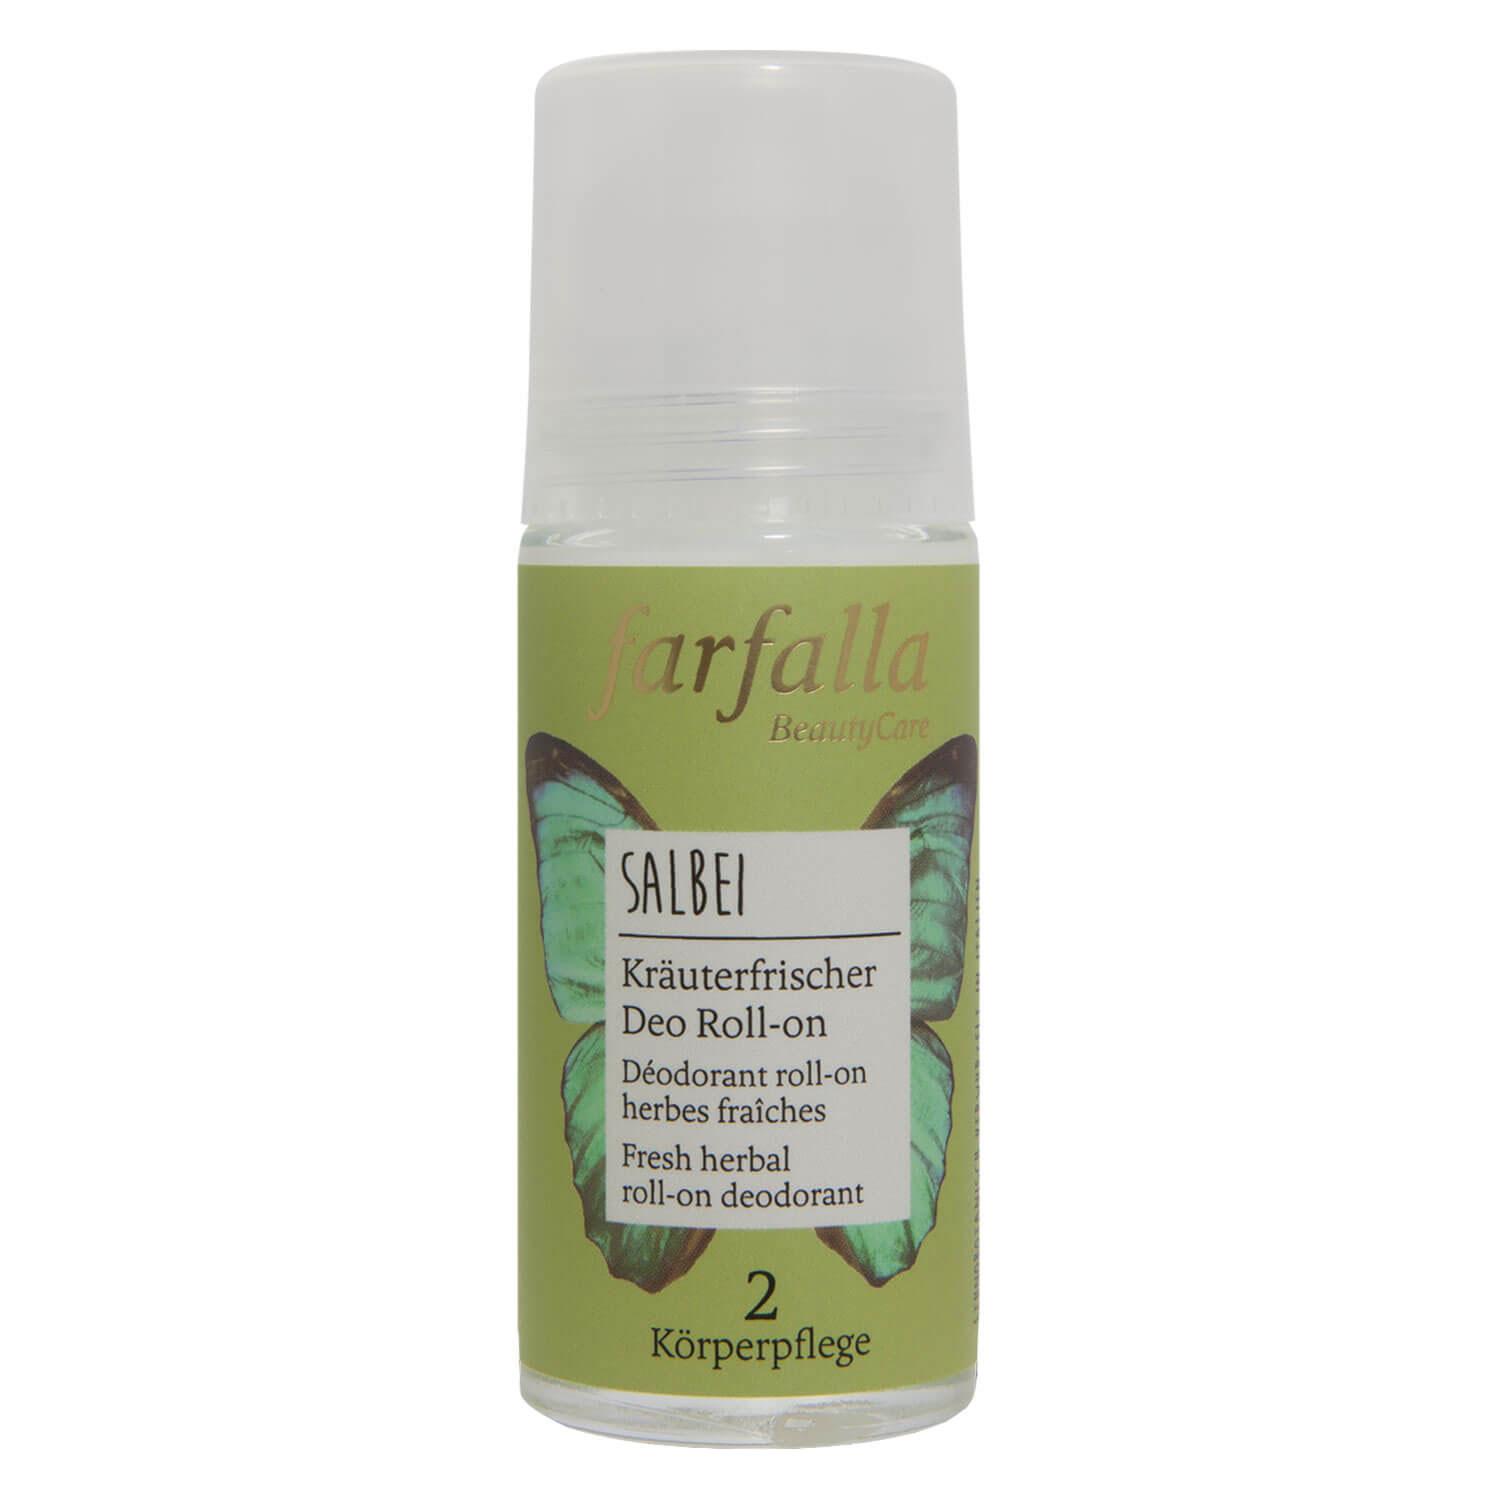 Farfalla Care - Salbei Fresh herbal roll-on deodorant